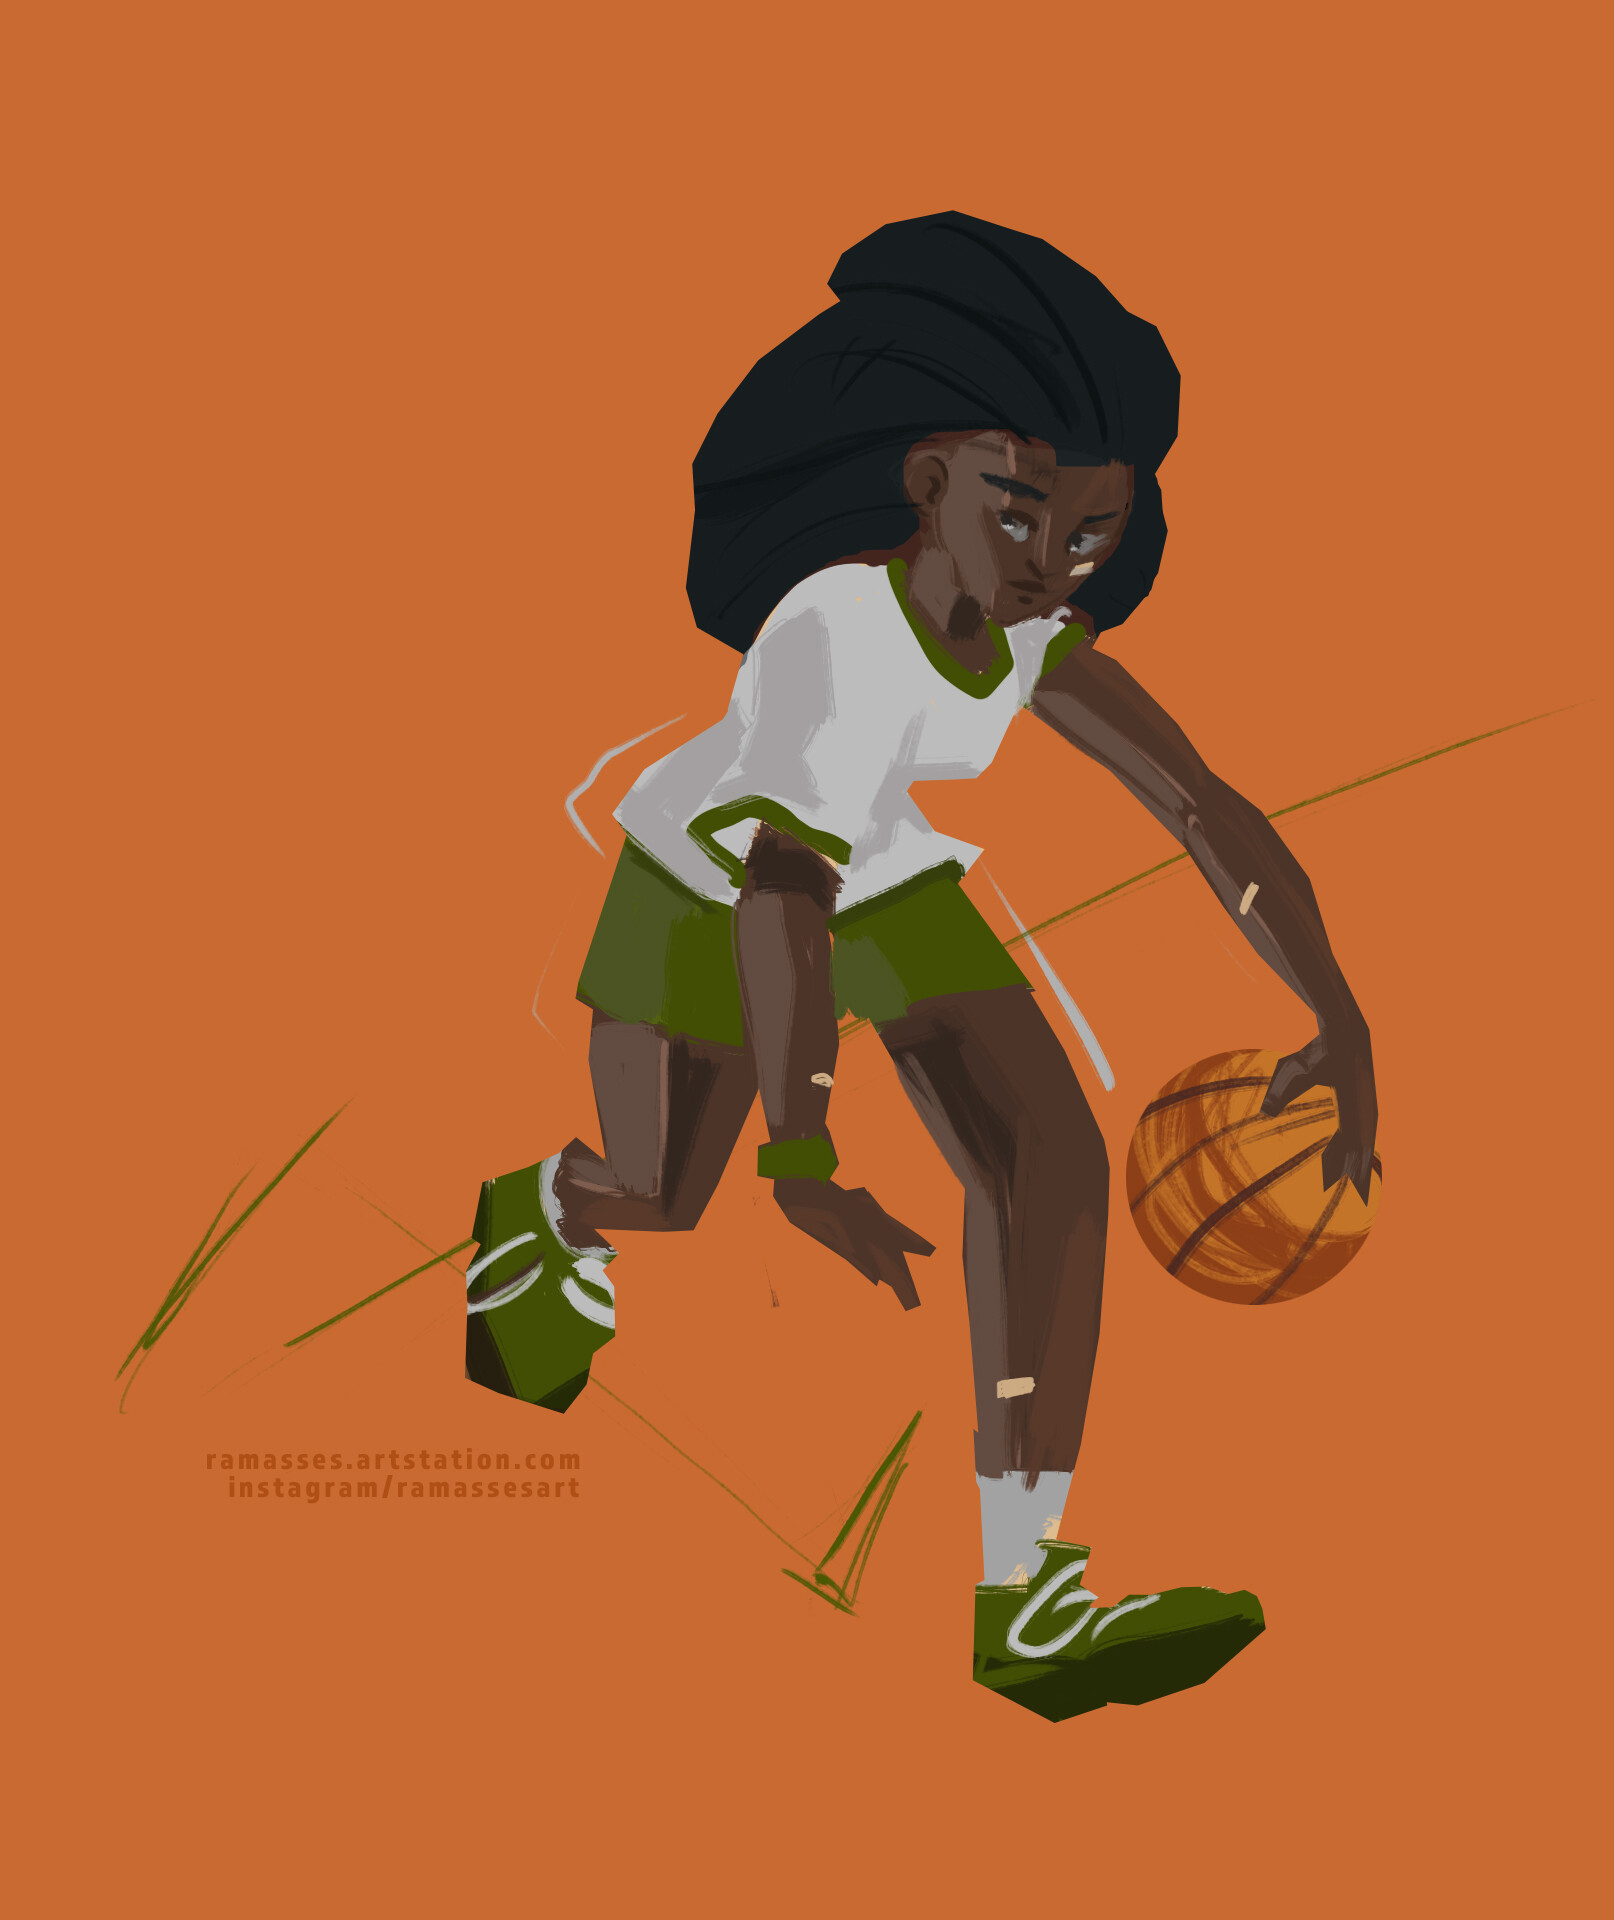 ArtStation - Basketball Player - Wip